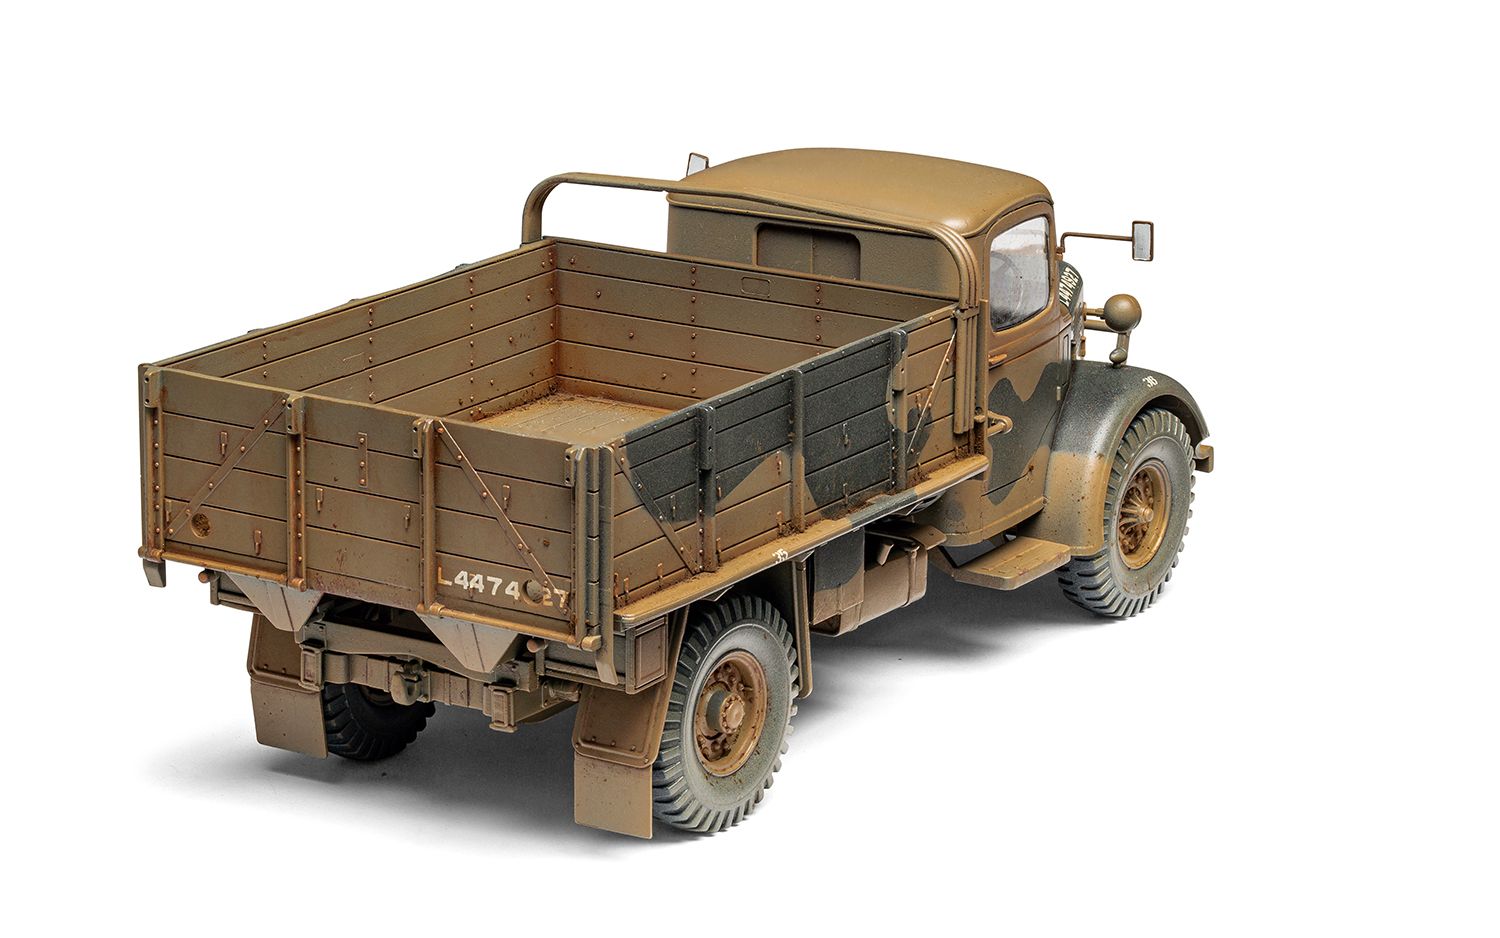 Airfix A1380 WWII British Army 30-Cwt 4x2 GS Truck